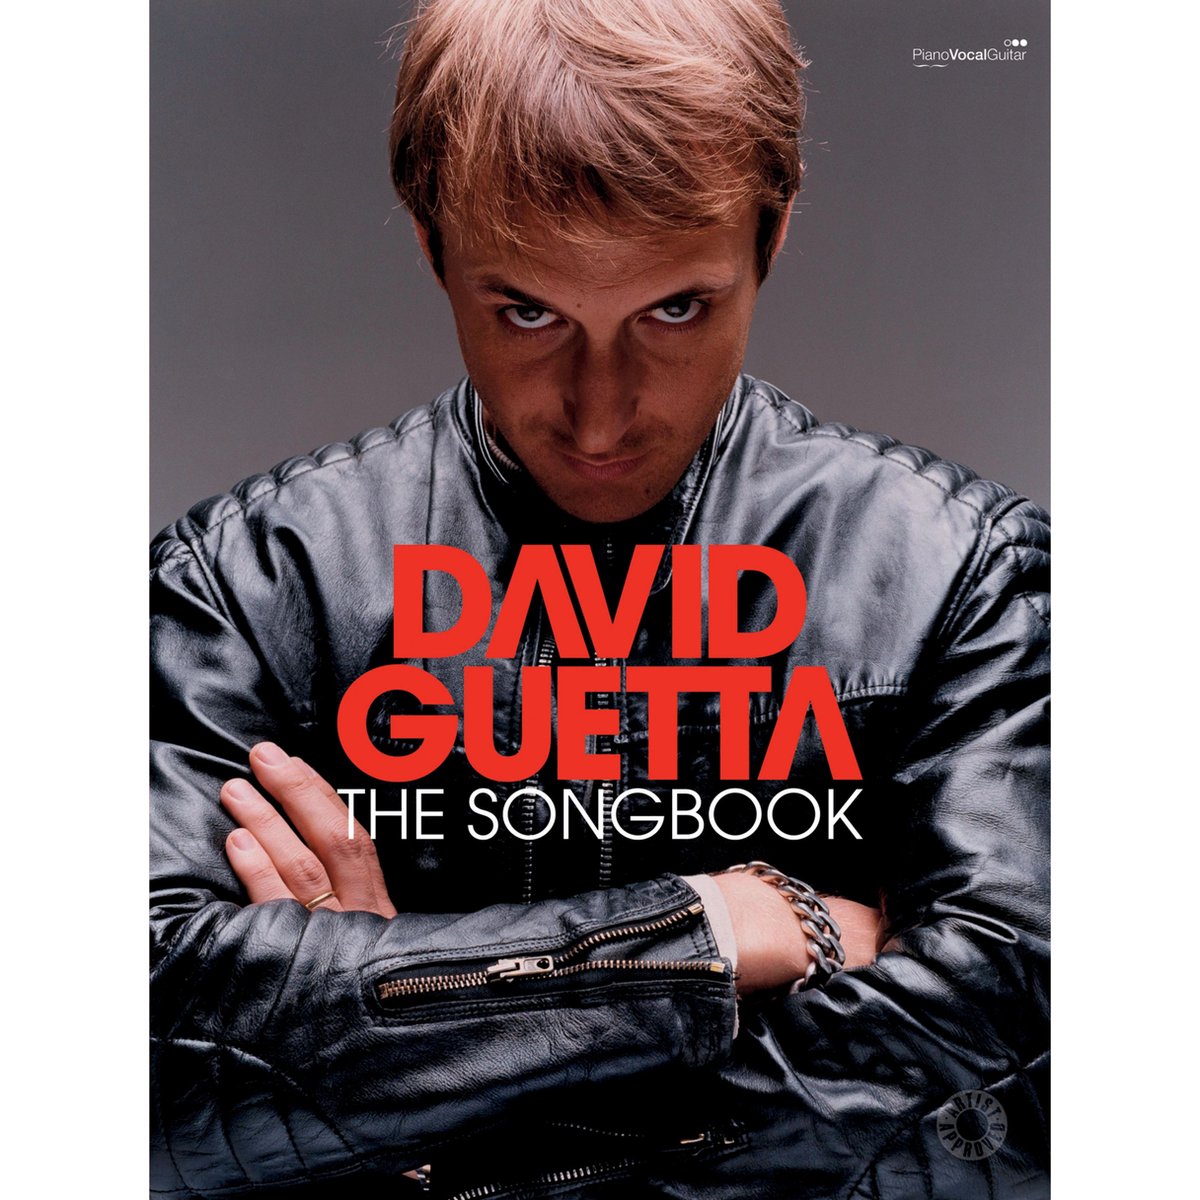 David Guetta - David Guetta